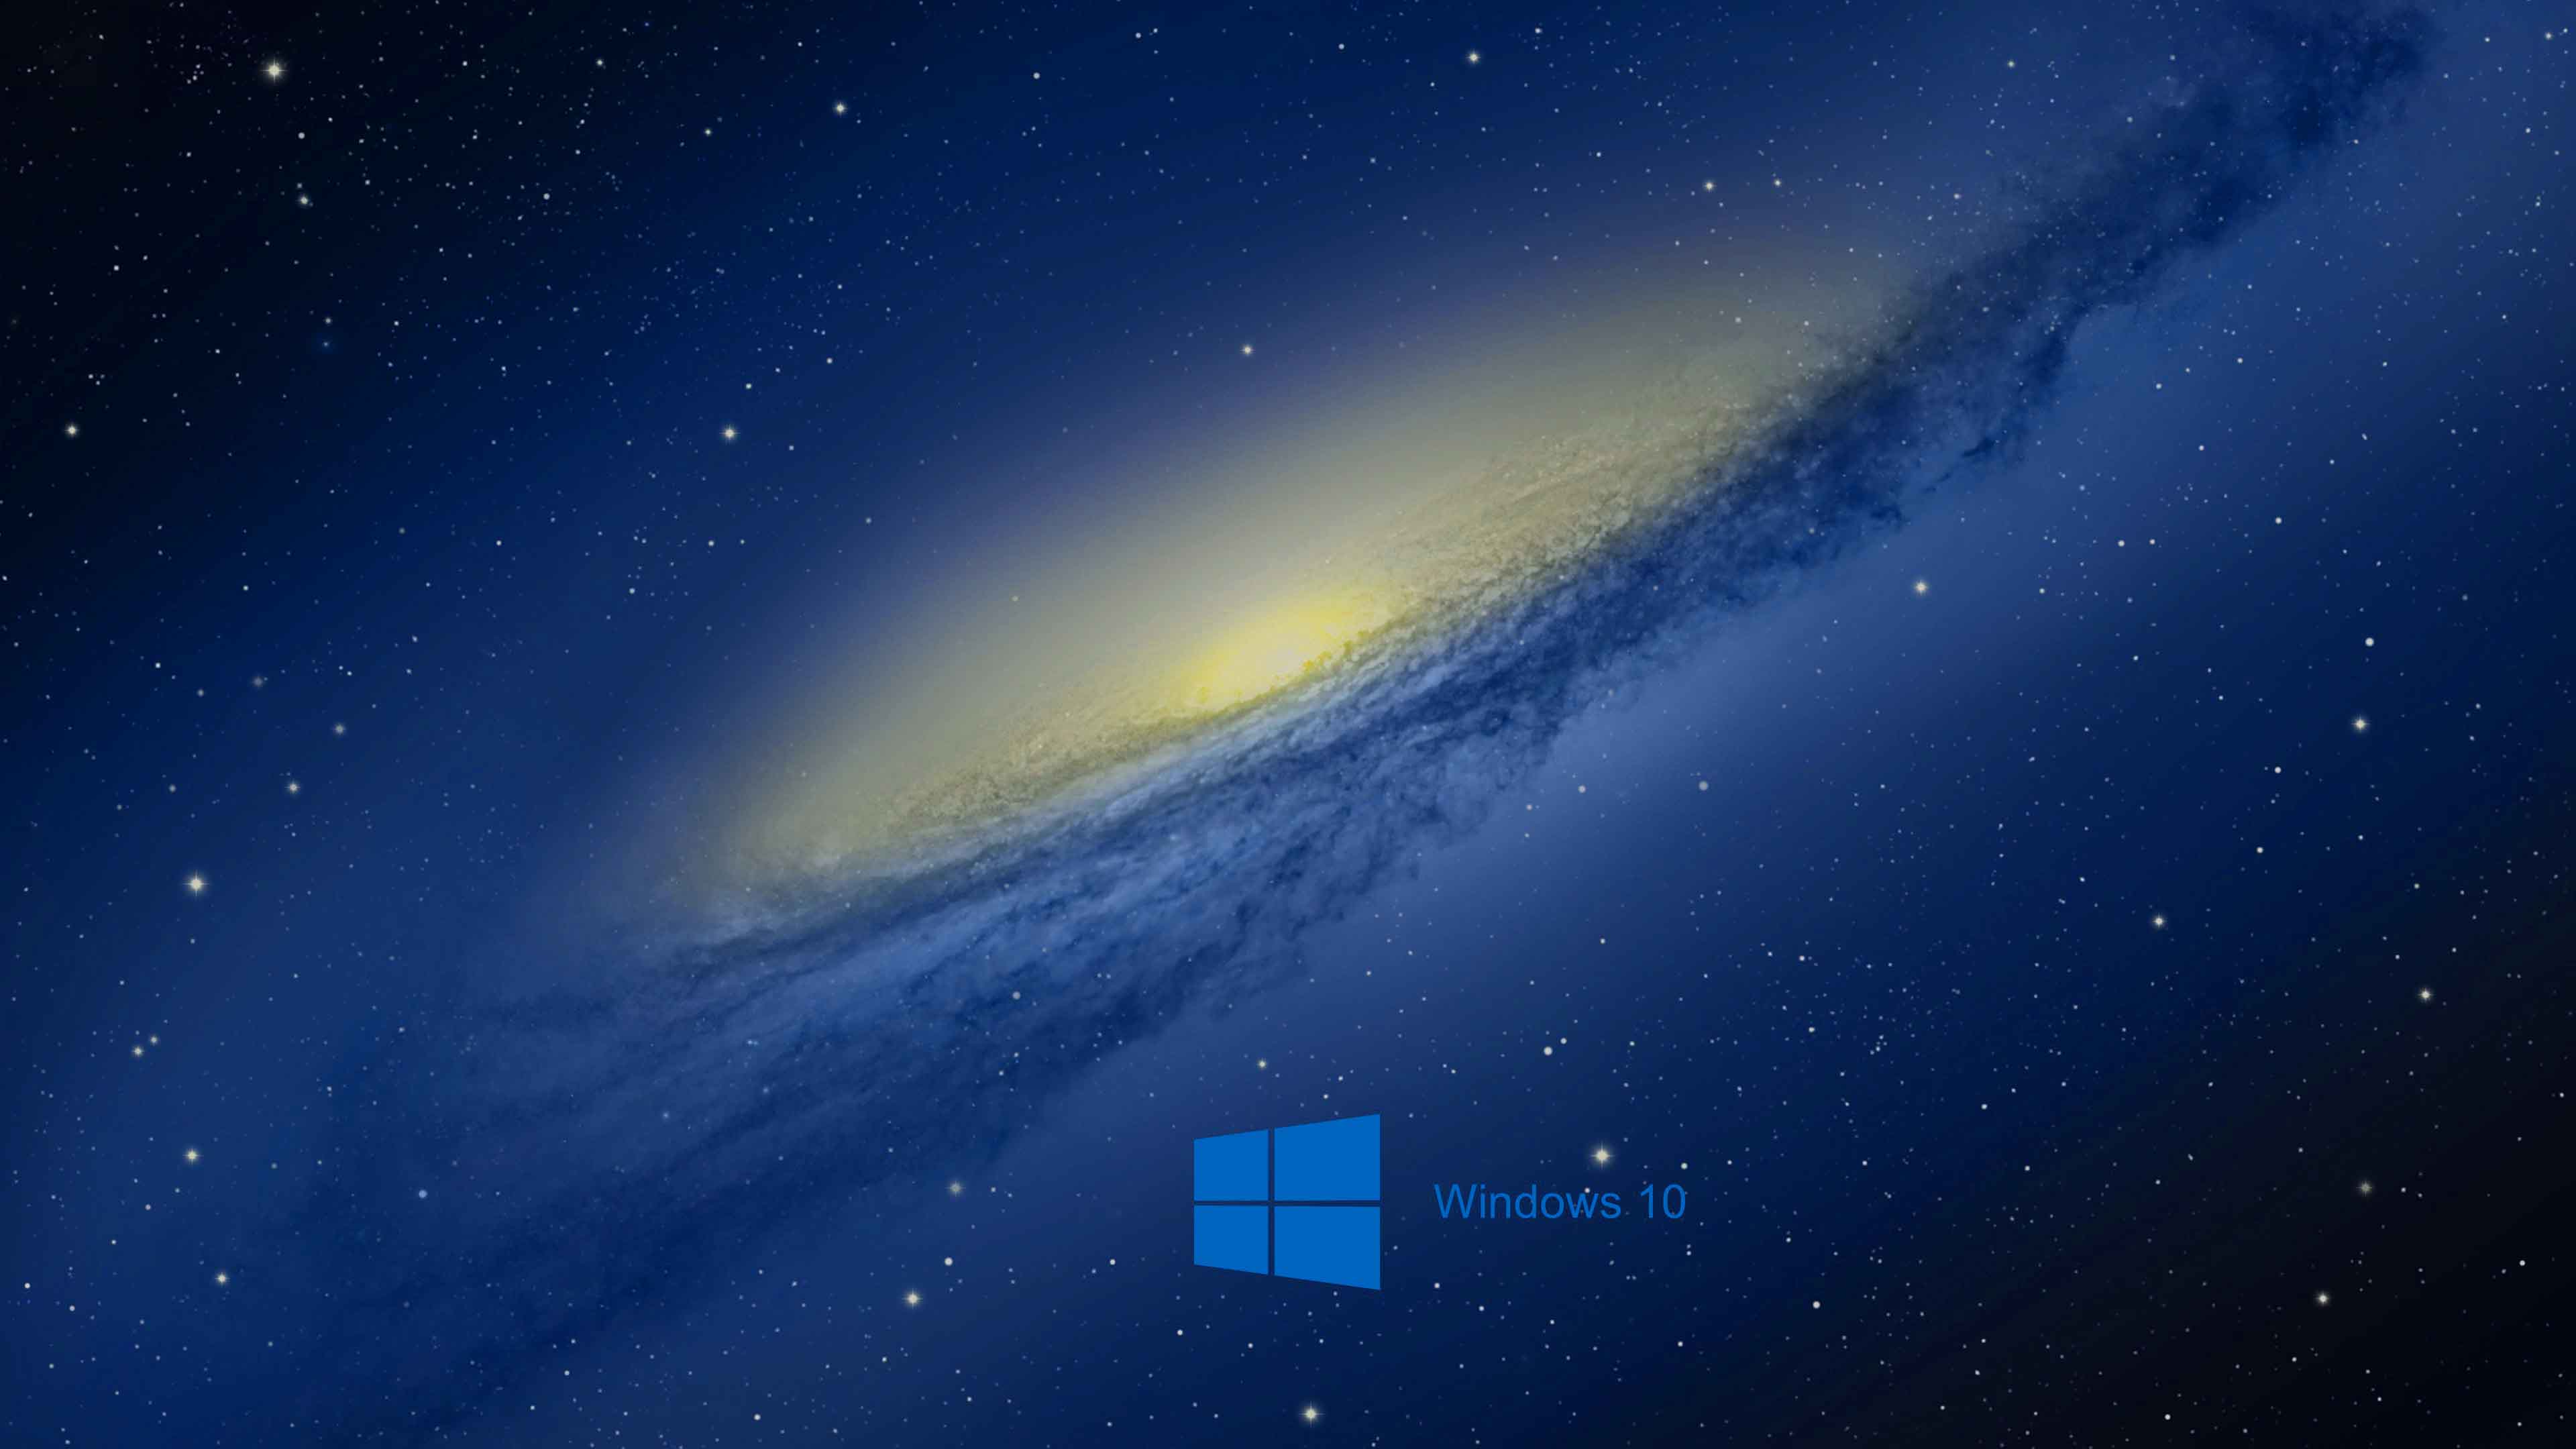 Download Windows 10 wallpaper in 2021